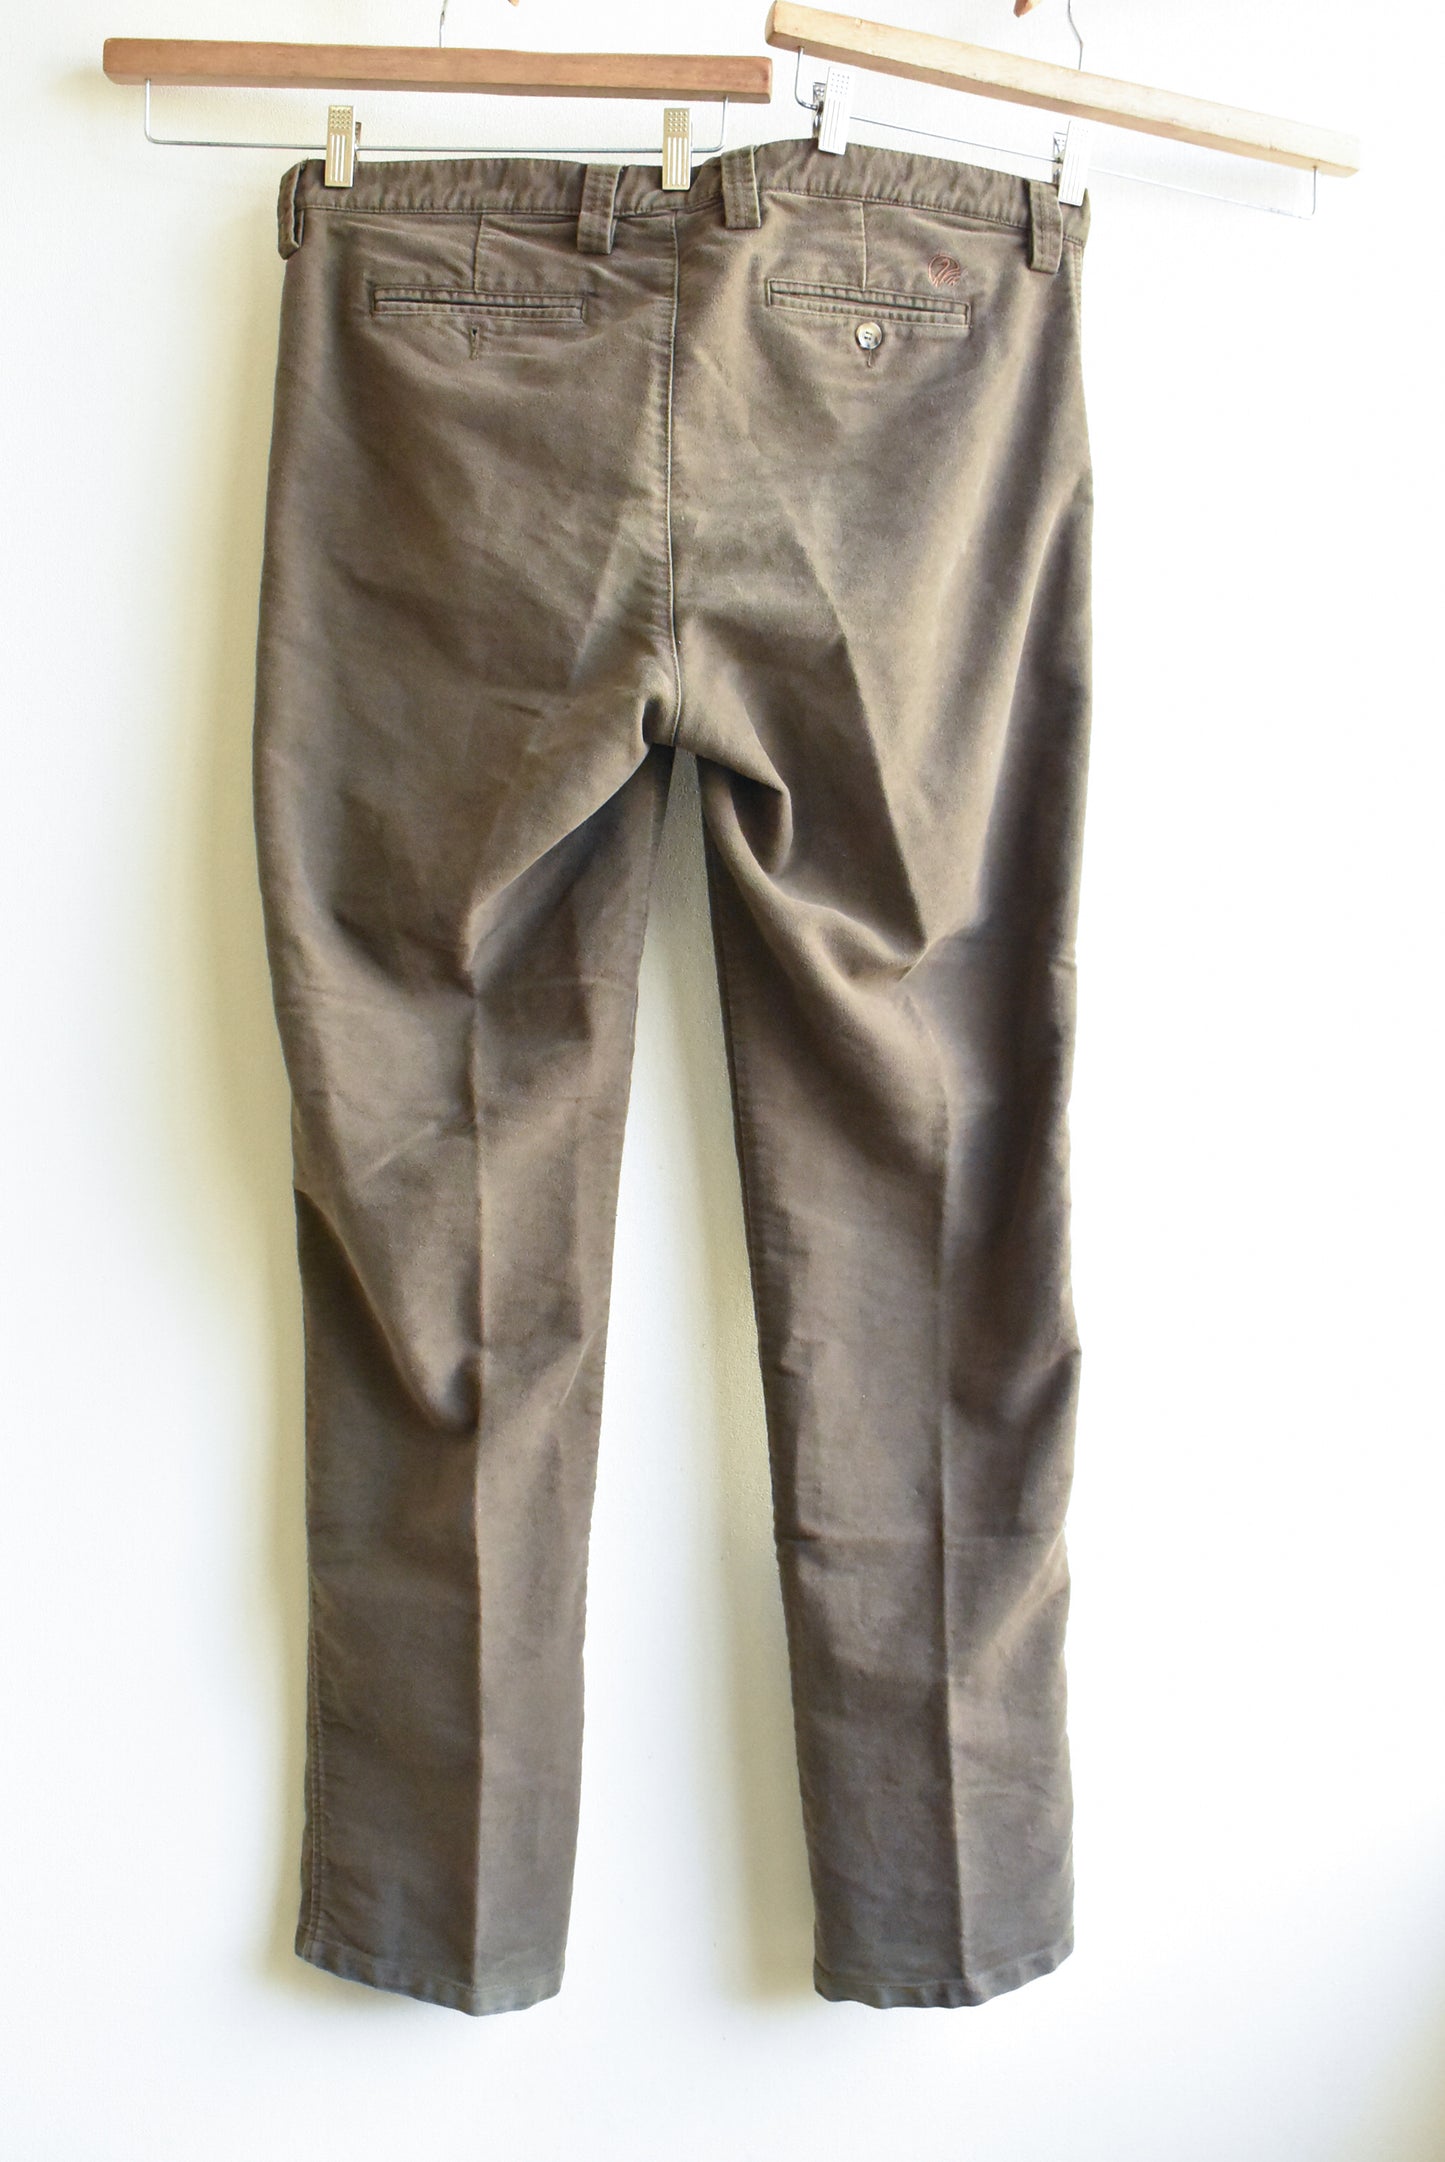 Swanndri trousers, size 97cm